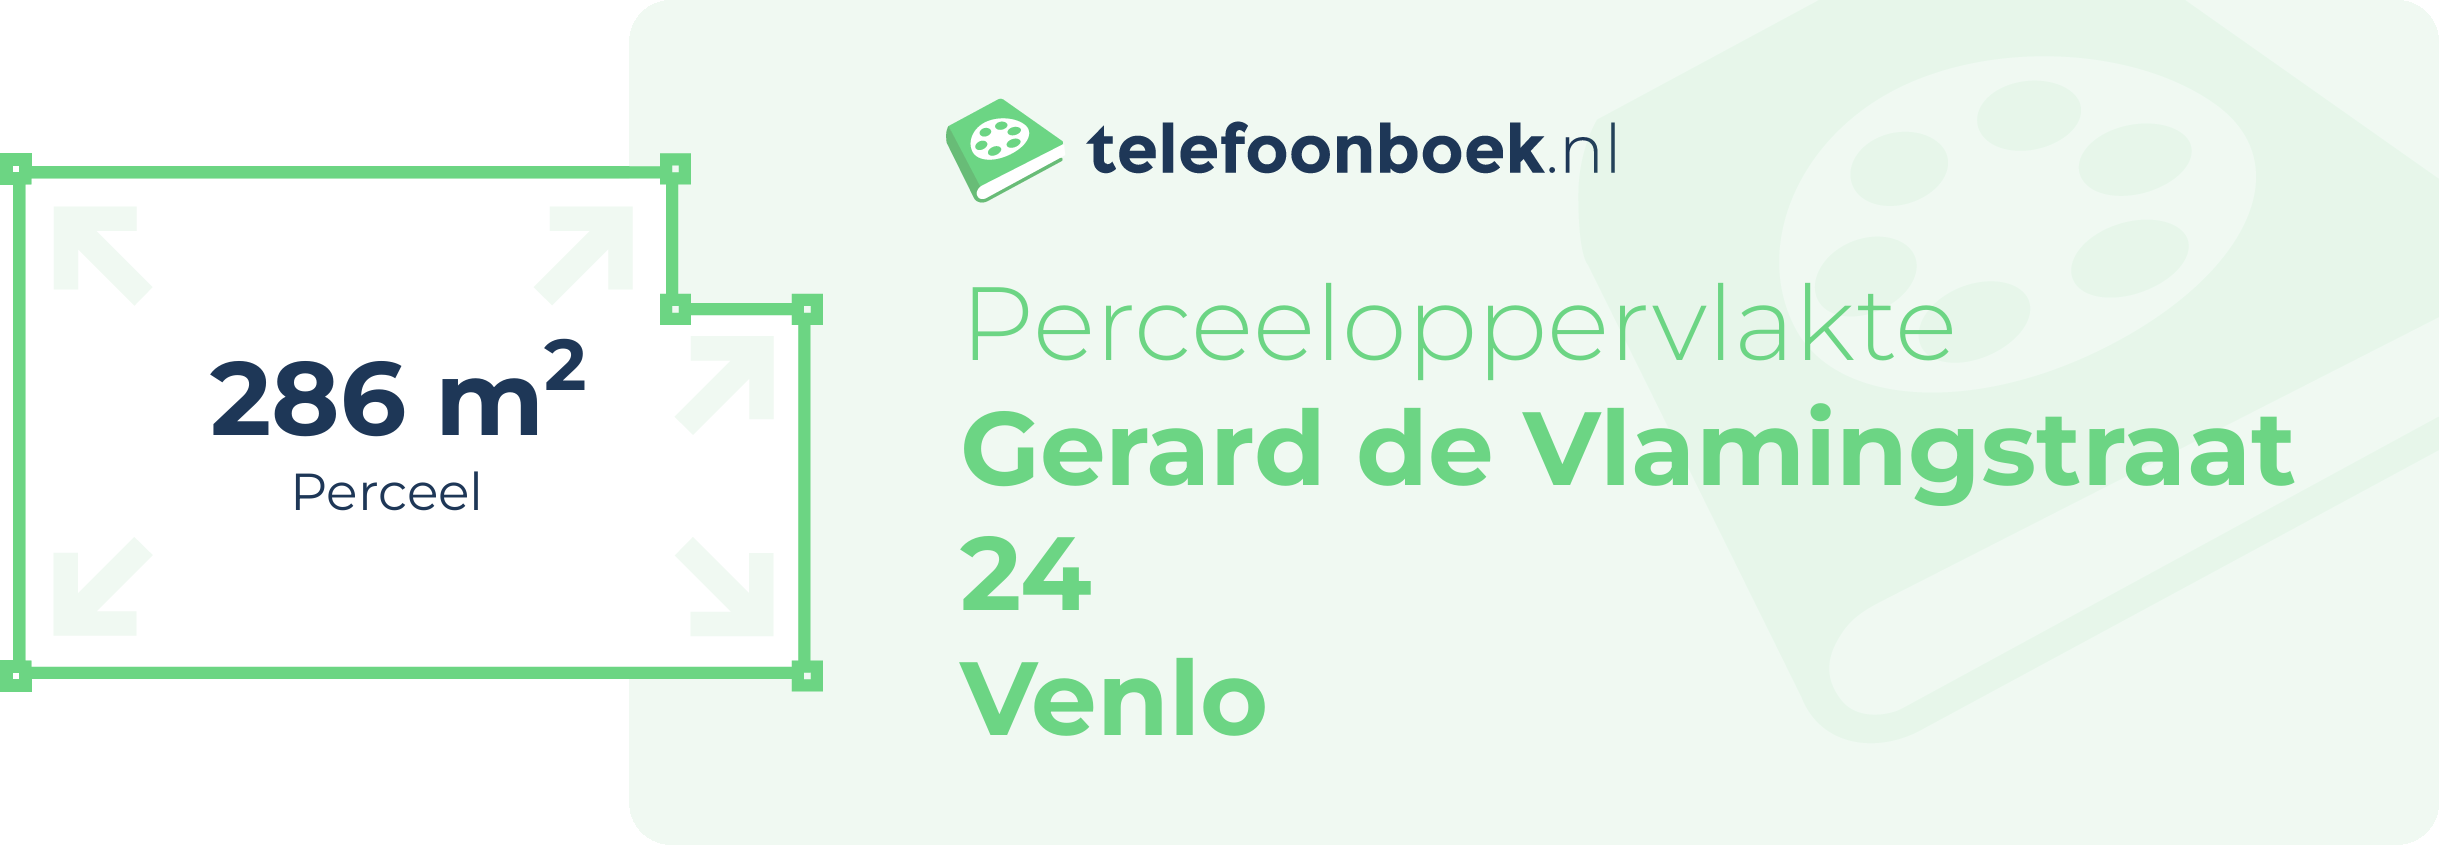 Perceeloppervlakte Gerard De Vlamingstraat 24 Venlo